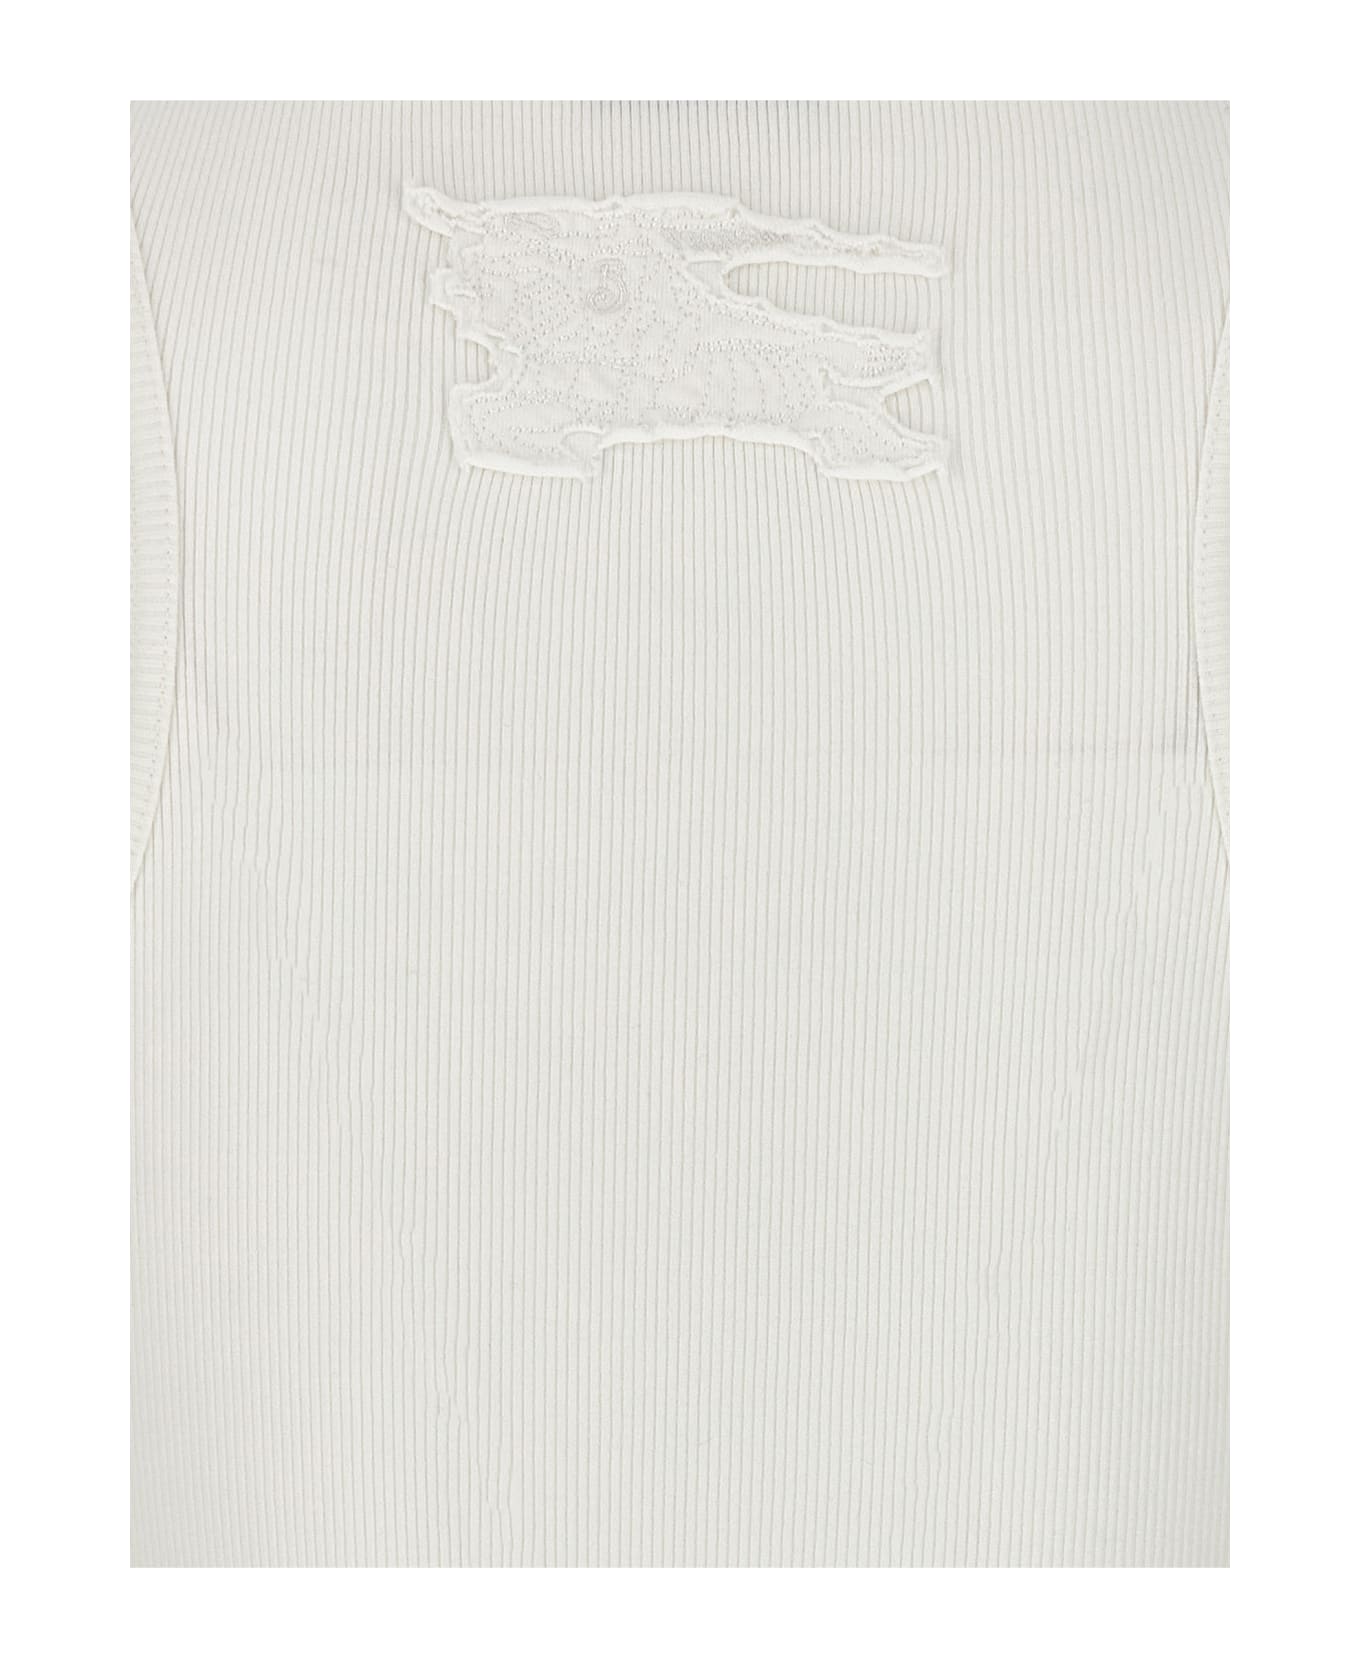 Burberry Logo Embroidery Tank Top - White